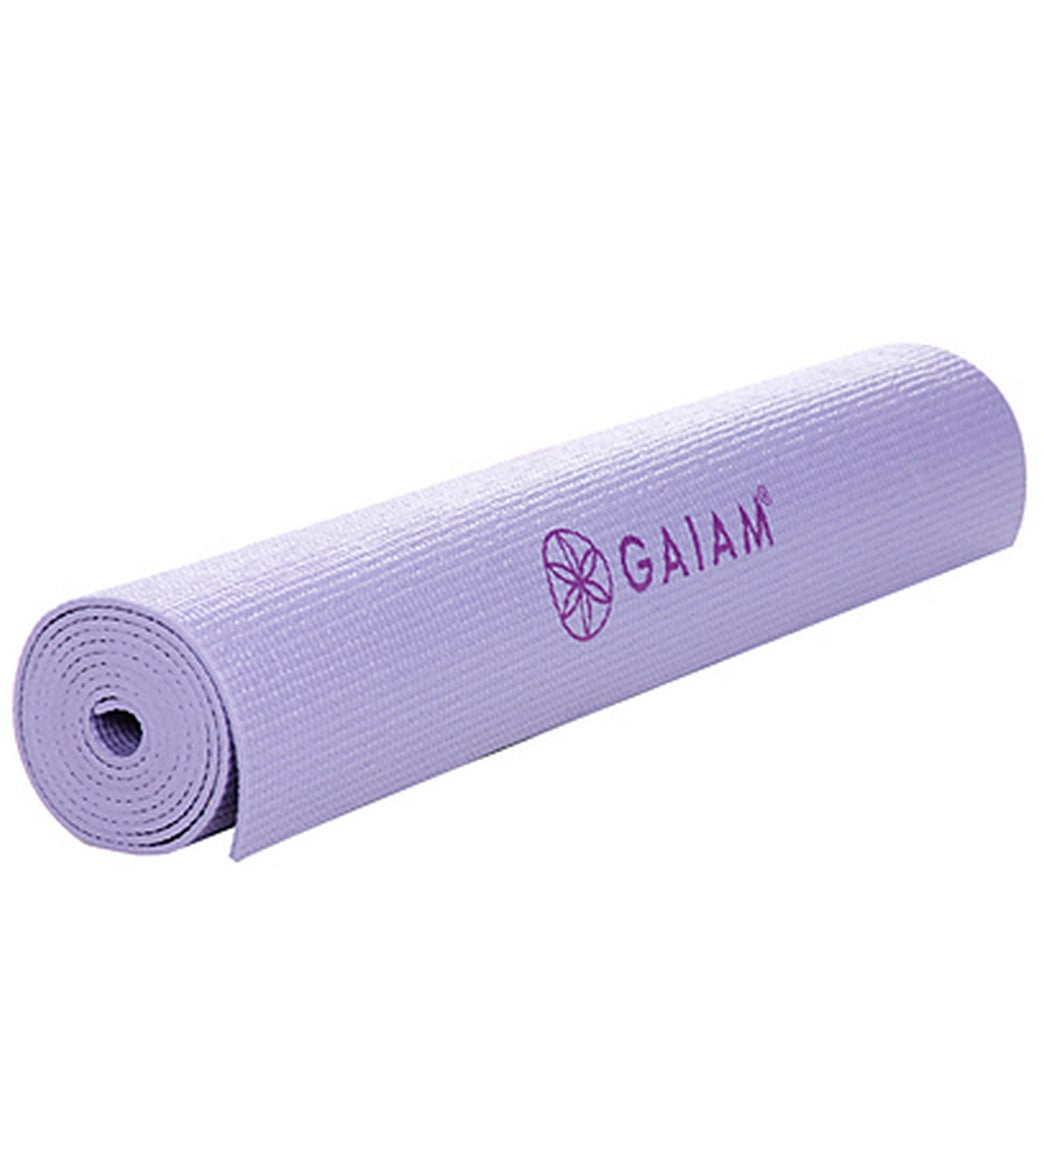 Gaiam Yoga Products Yoga Products